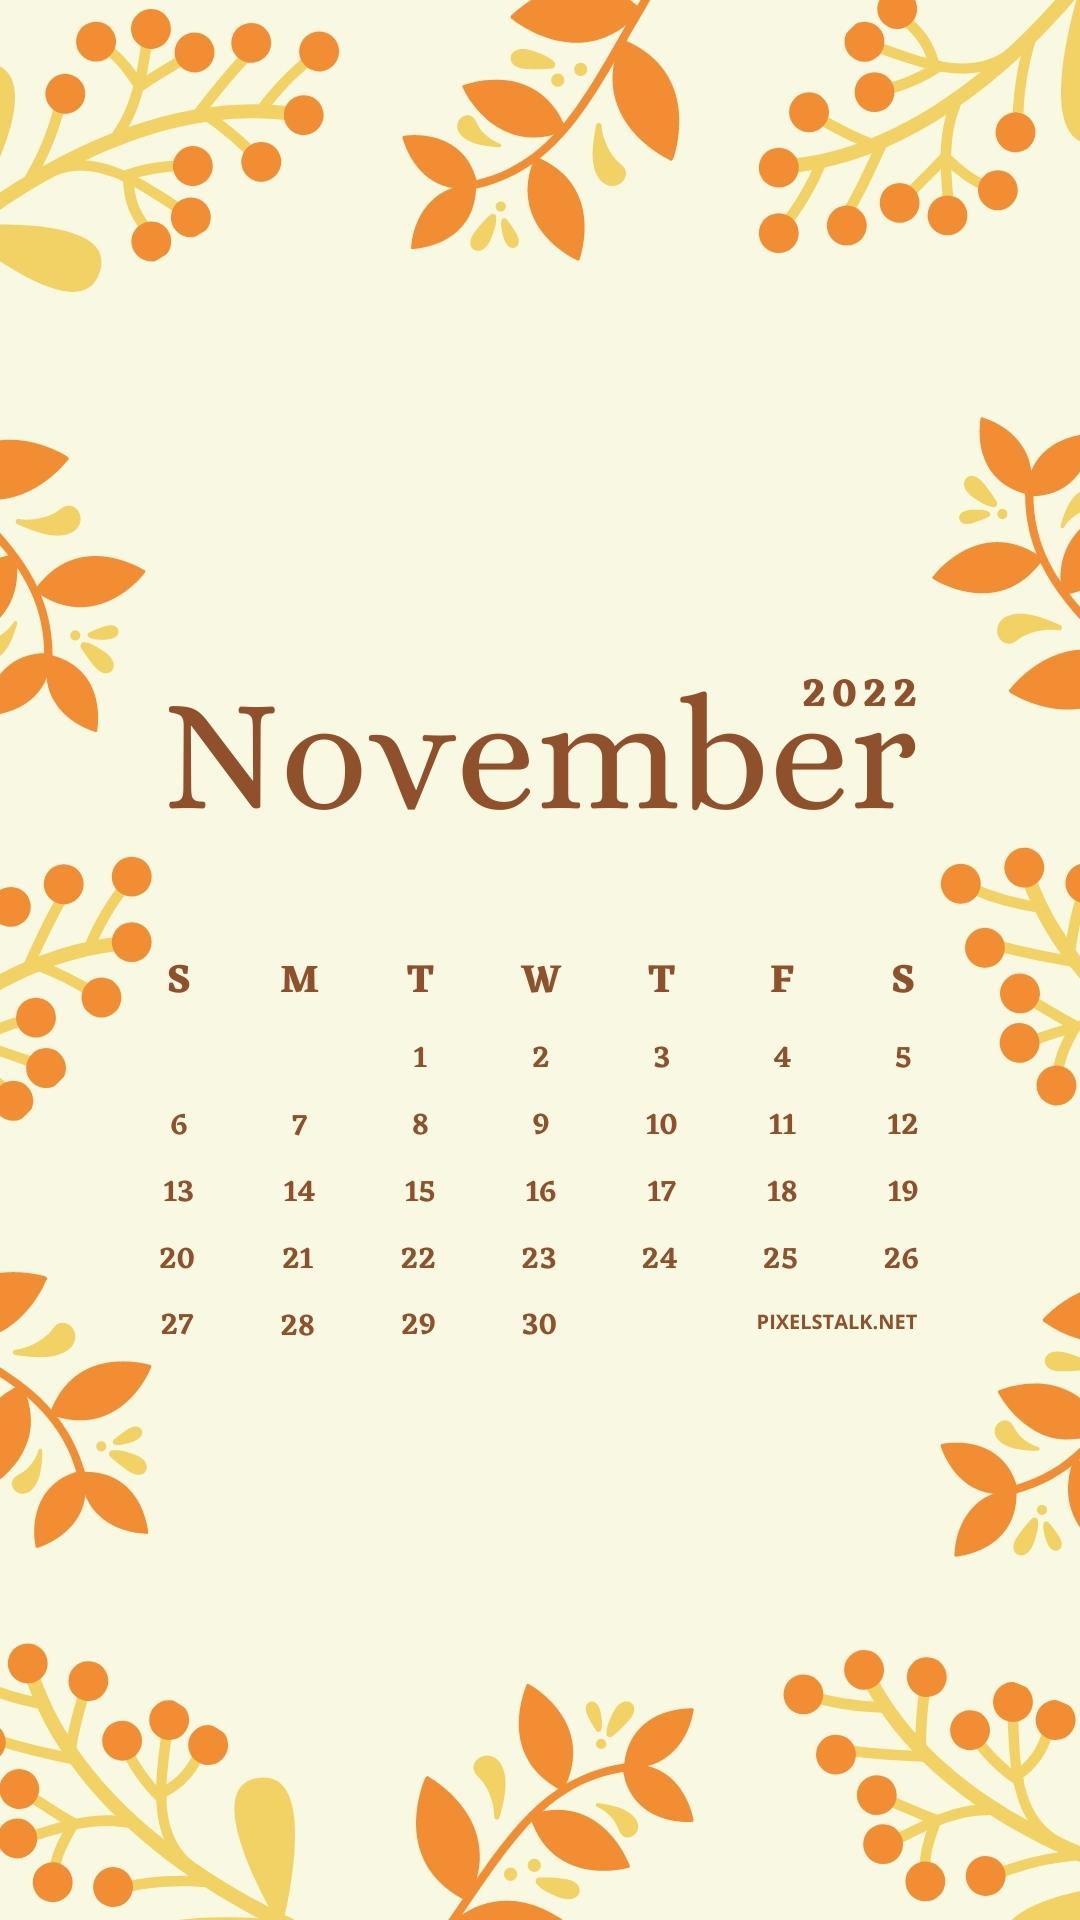 November 2022 Calendar Phone Wallpapers HD 